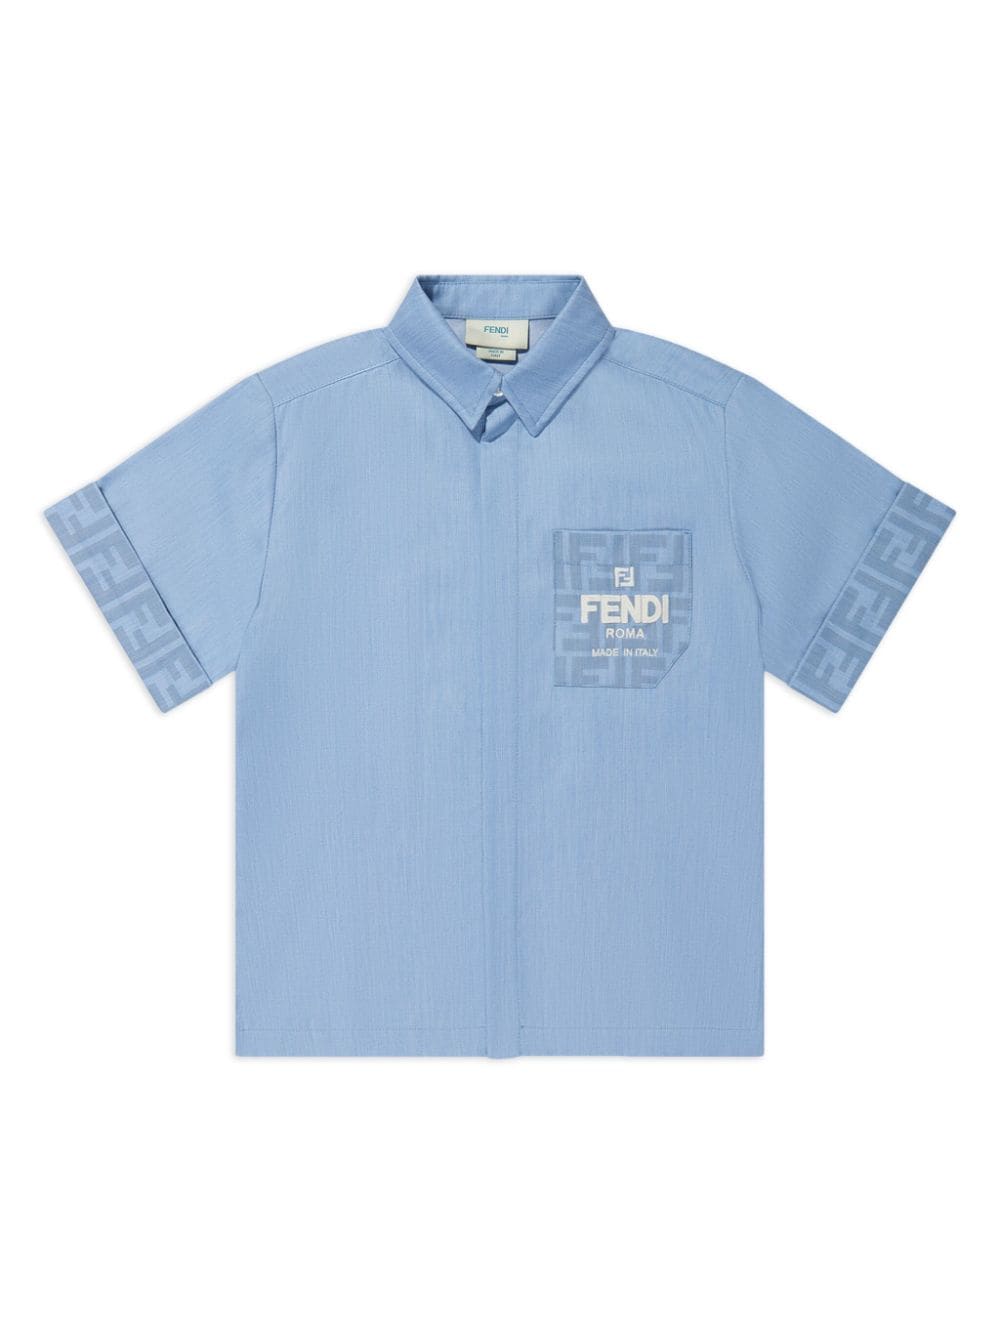 Fendi Kids Hemd mit FF - Blau